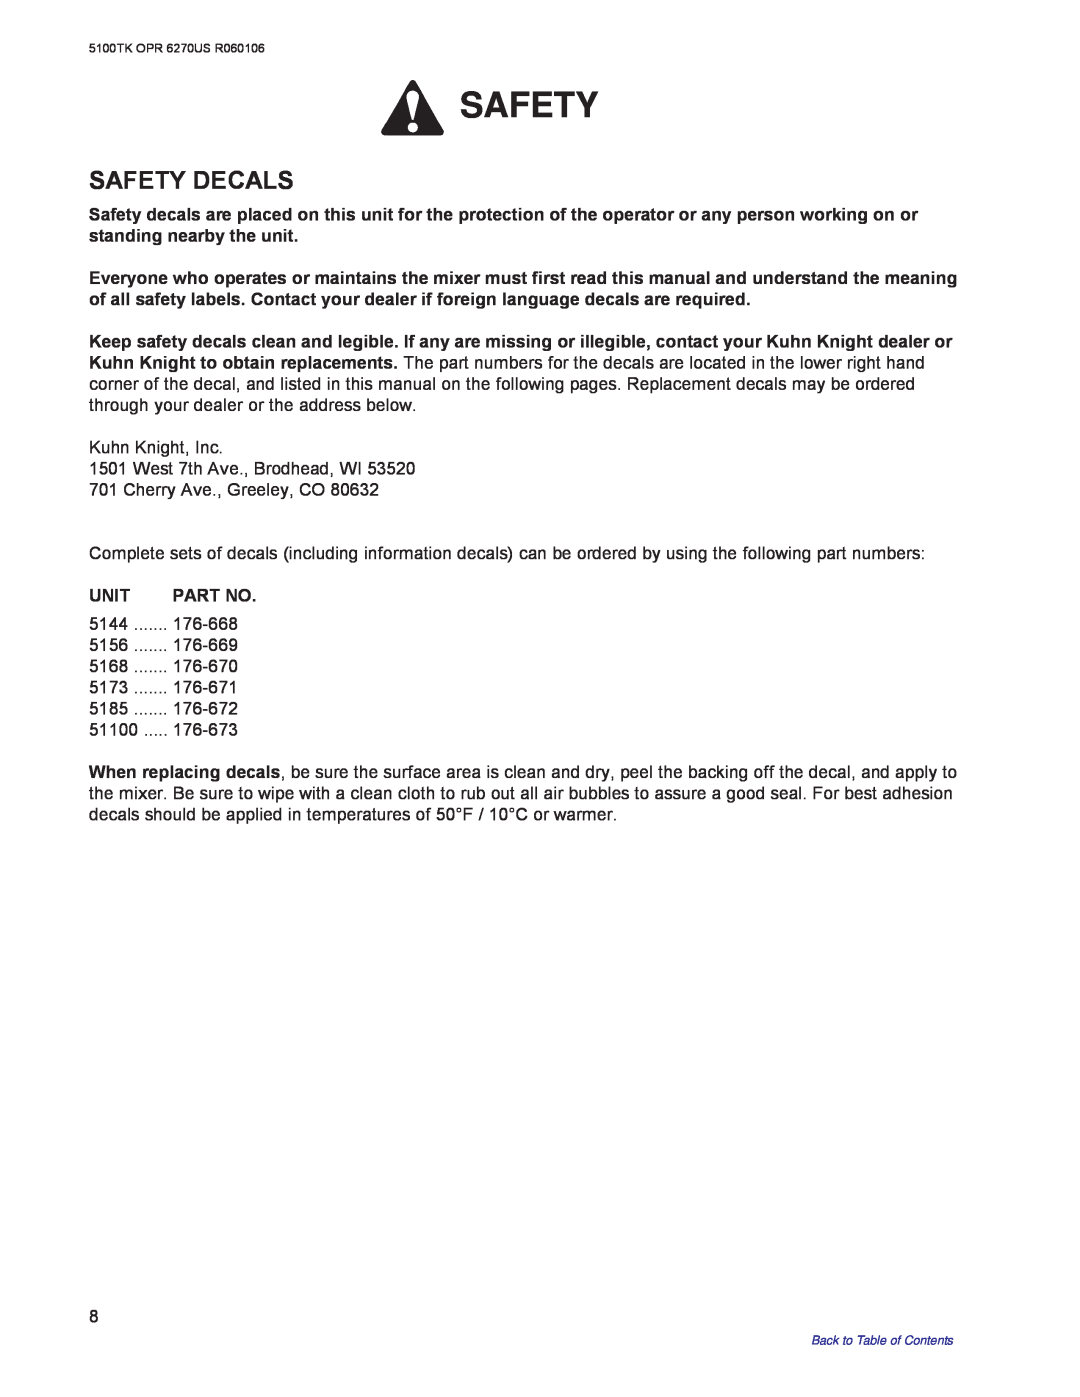 Kuhn Rikon 5100 instruction manual Safety Decals 